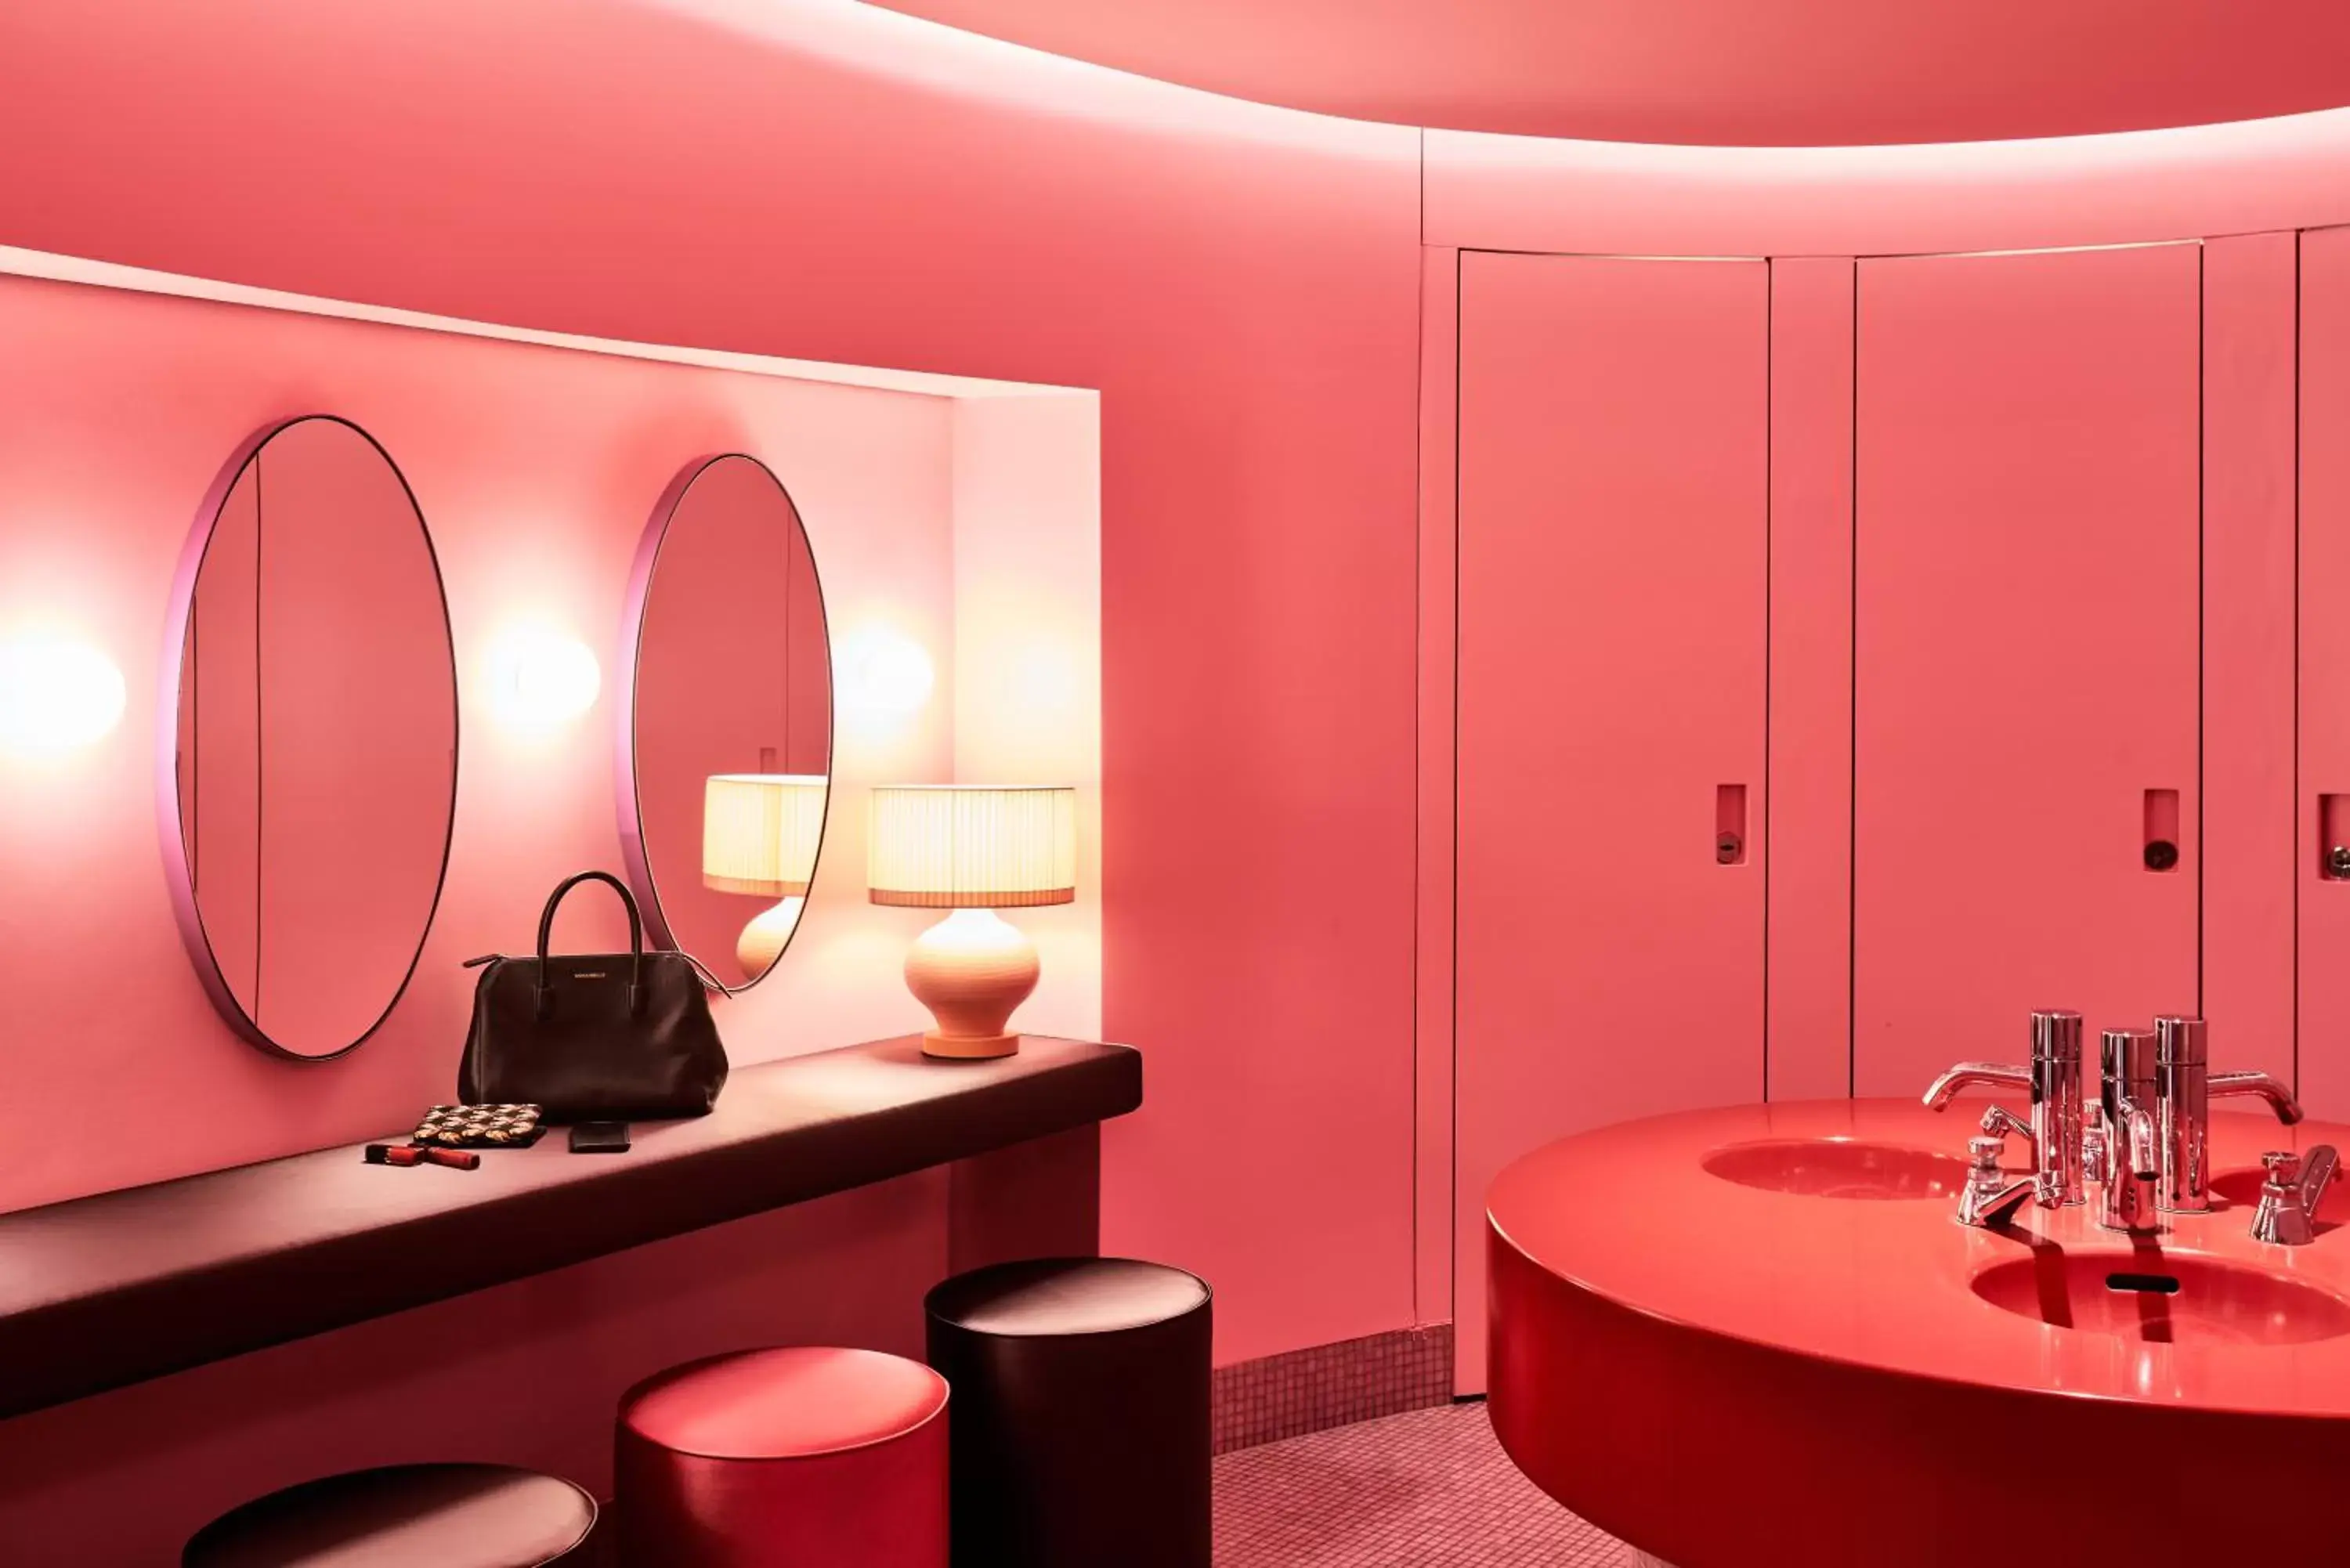 Area and facilities, Bathroom in SIDE Design Hotel Hamburg